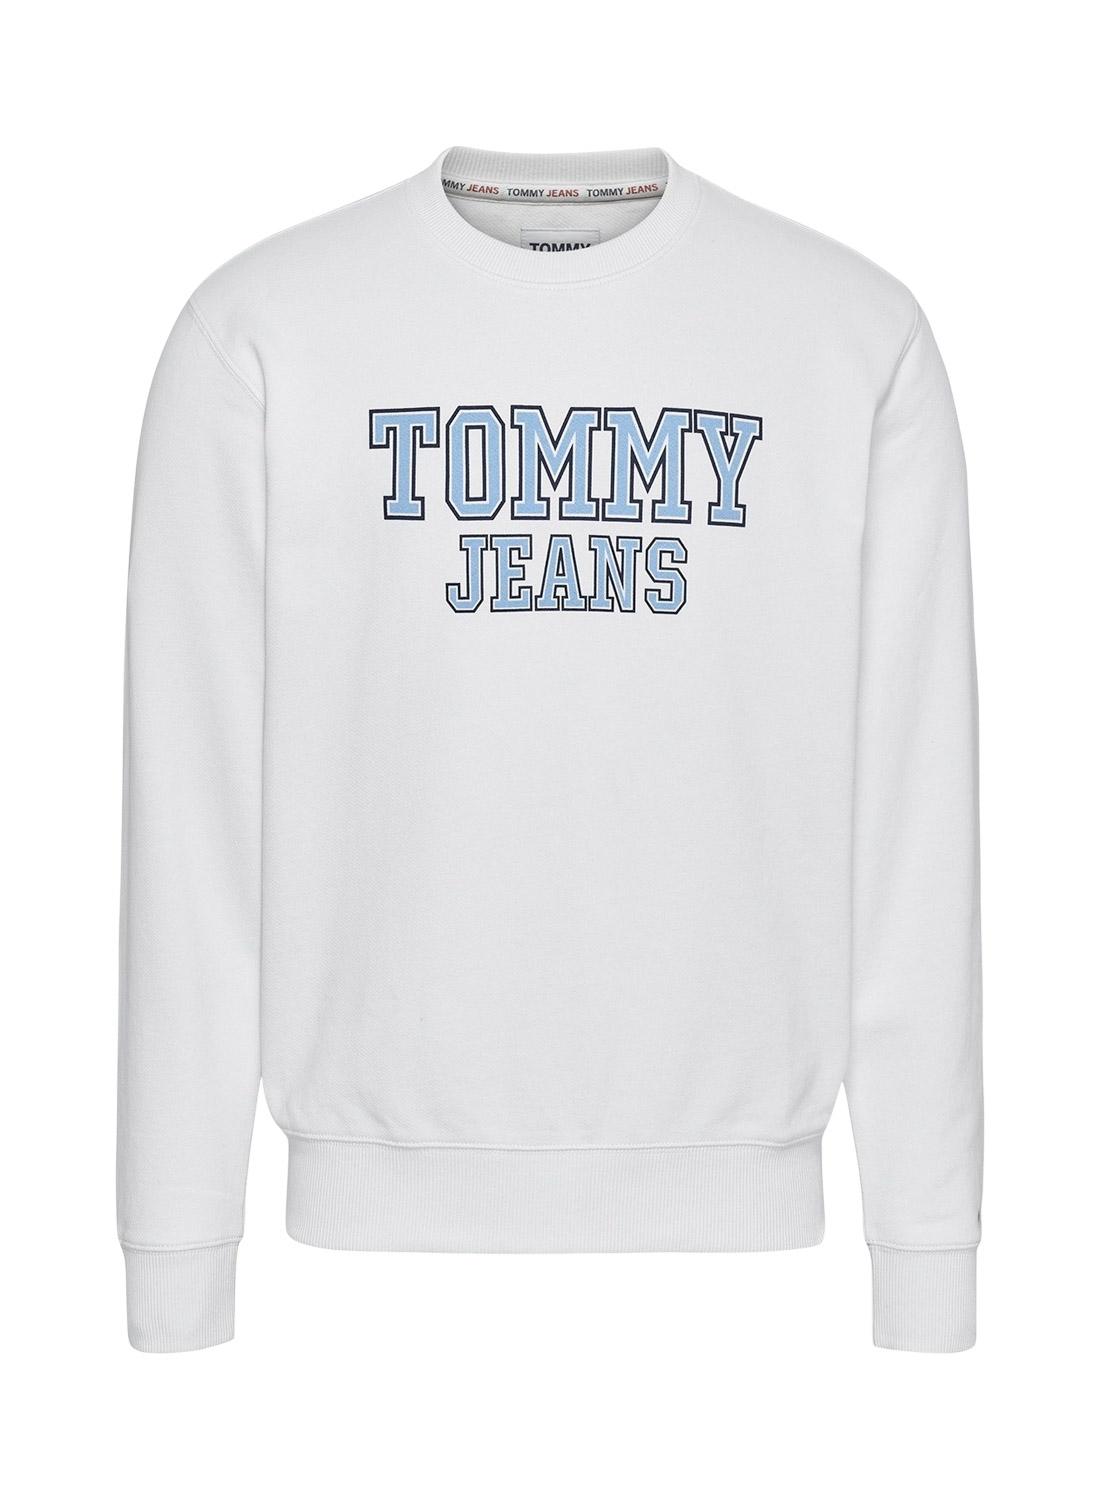 Felpa Tommy Jeans Crew Bianco per Uomo